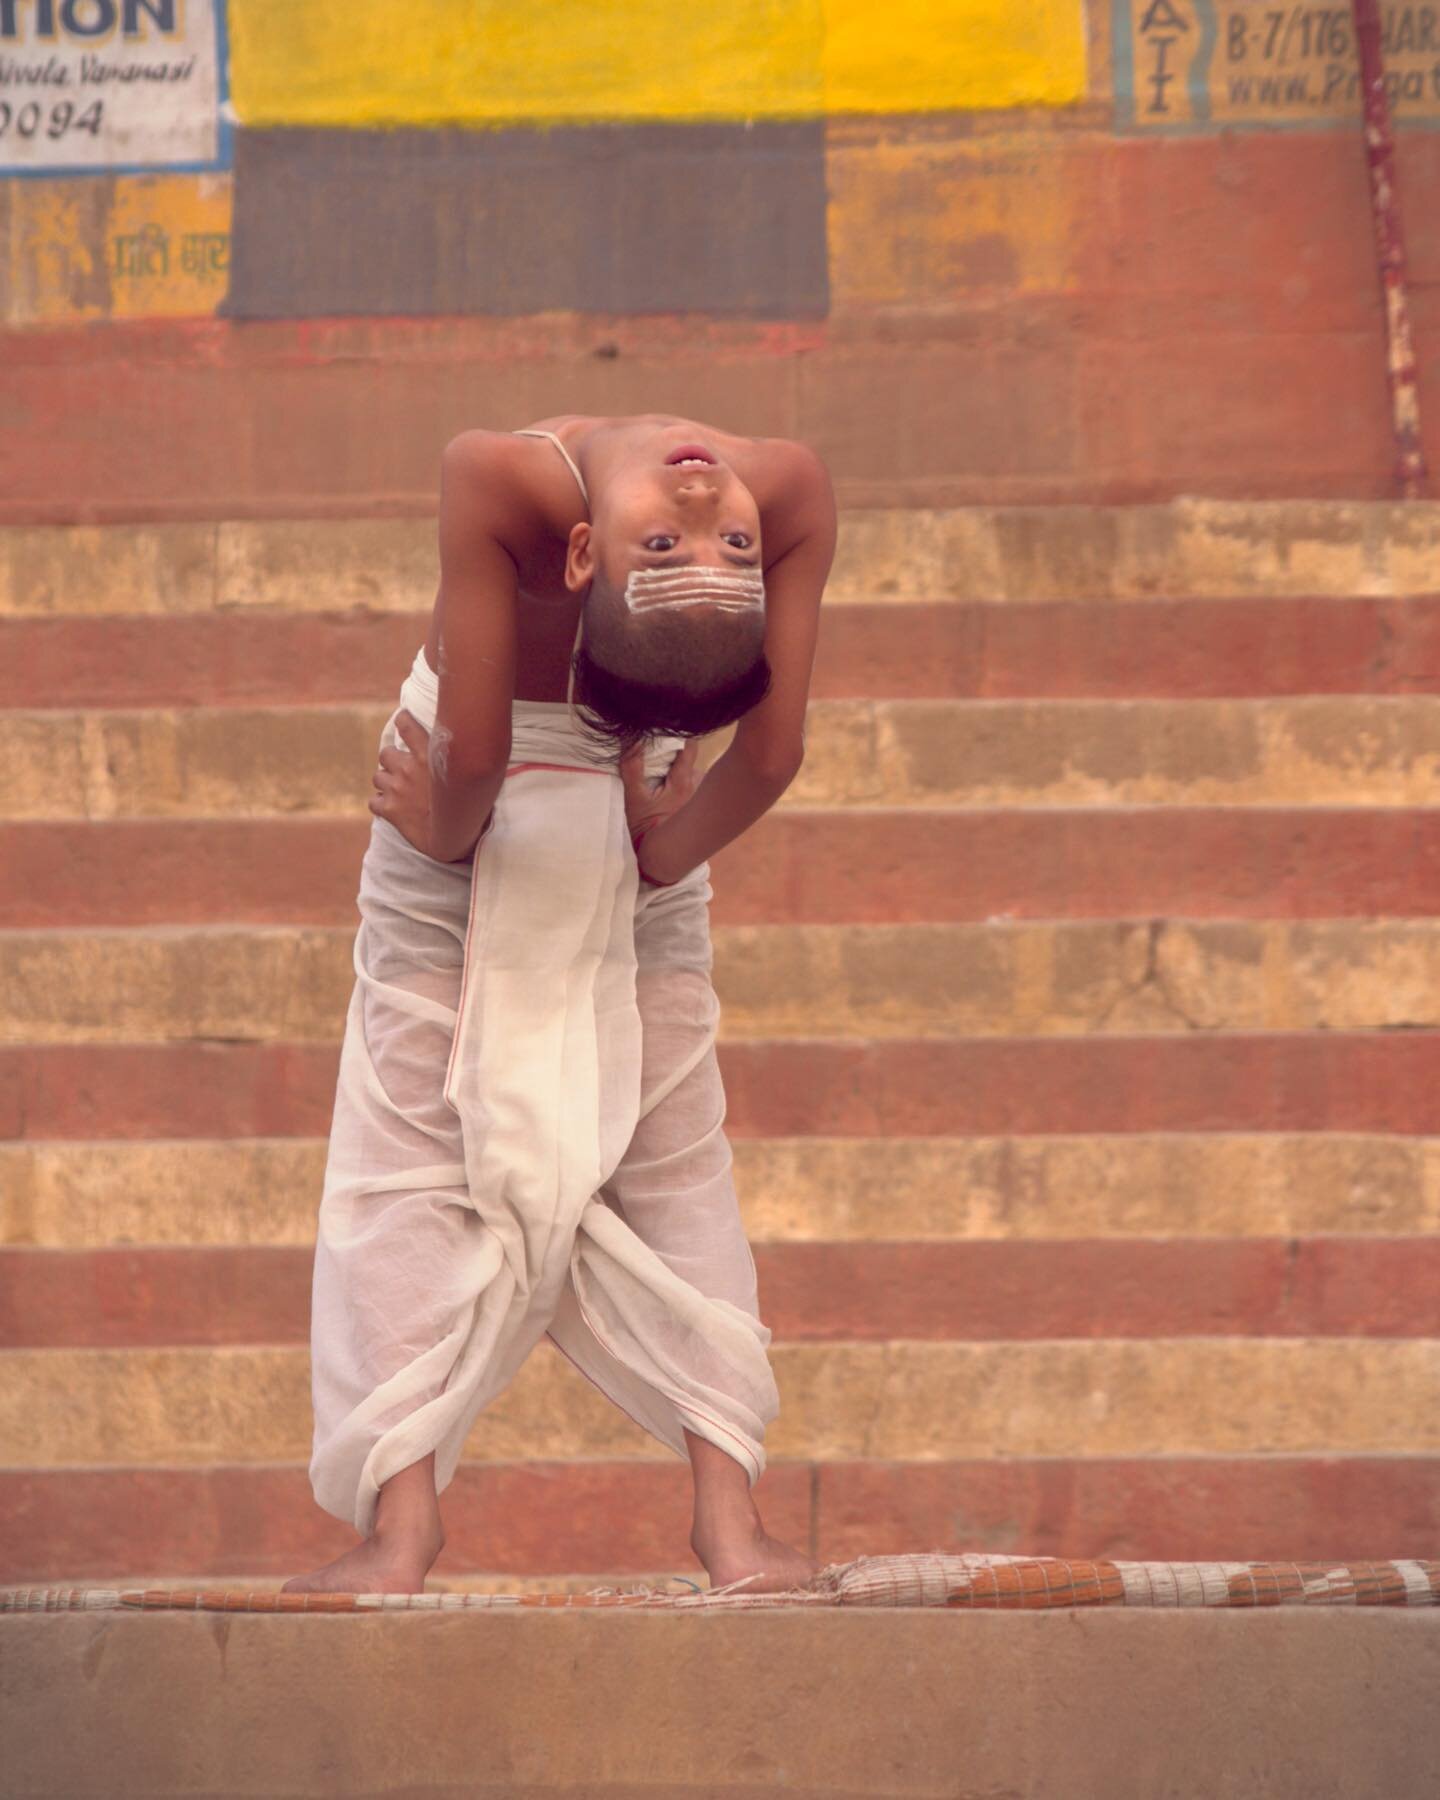 The world upside down 

#benaras #yoga #travelphotography #varanasi #ghatsofvaranasi #varanasidiaries #incredibleindia #shotoncanon #sigma #sigmaart #travel #india #uttarpradesh #morningyoga #yogainspiration #yogapractice #morning #morningmotivation 